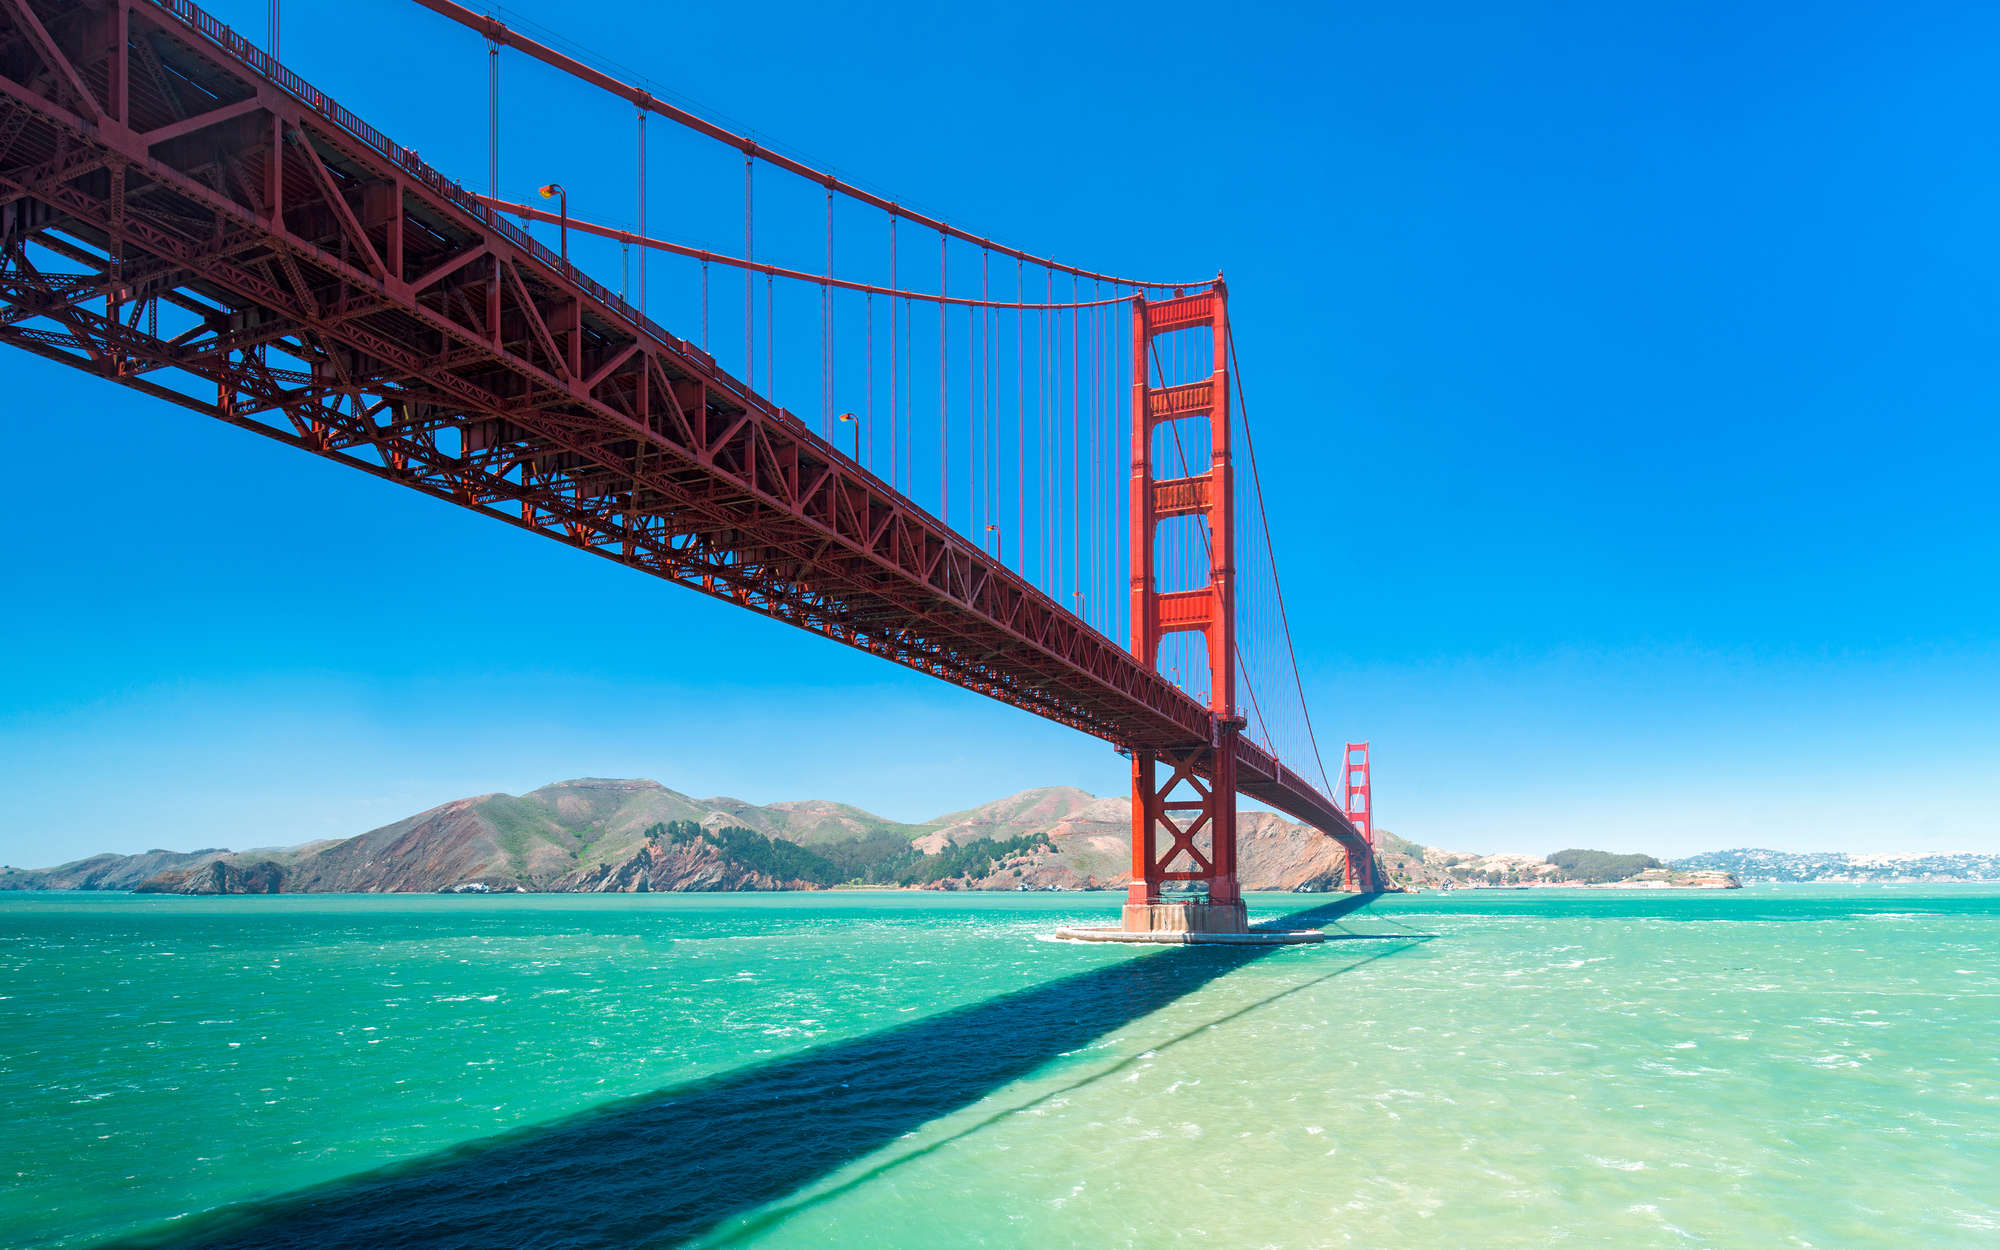             Ponte del Golden Gate a San Francisco - vello liscio perlato
        